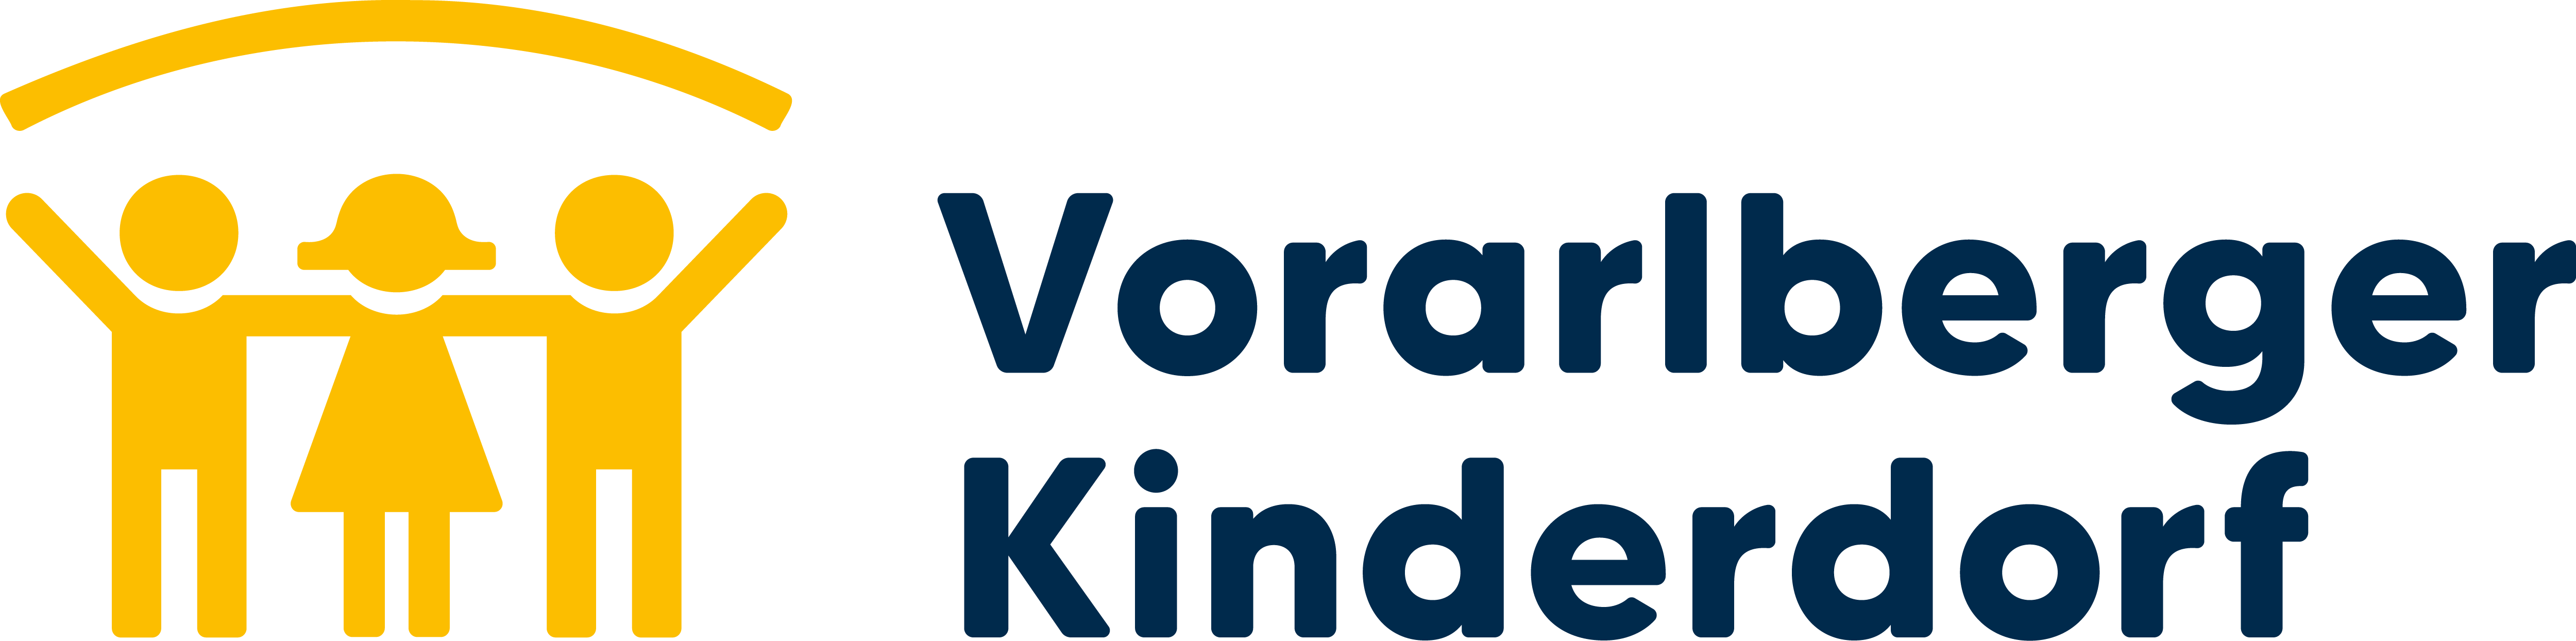 Kinderdorf Vorarlberg